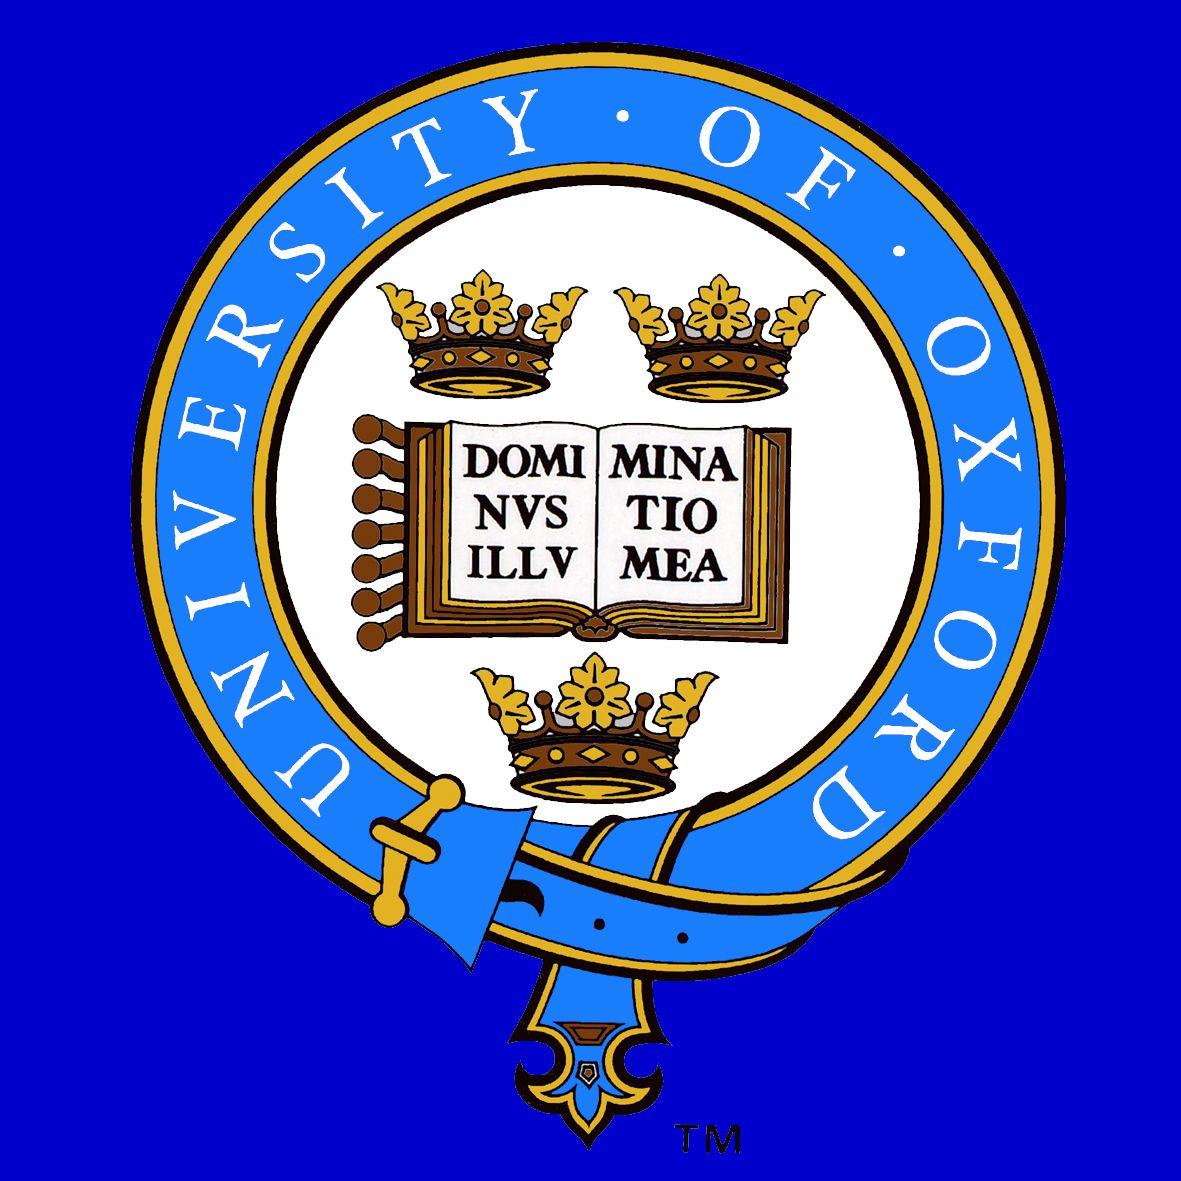 Universityofoxford Logo - University of Oxford Logo|D-Model: StickerCa-010236|Other famous ...